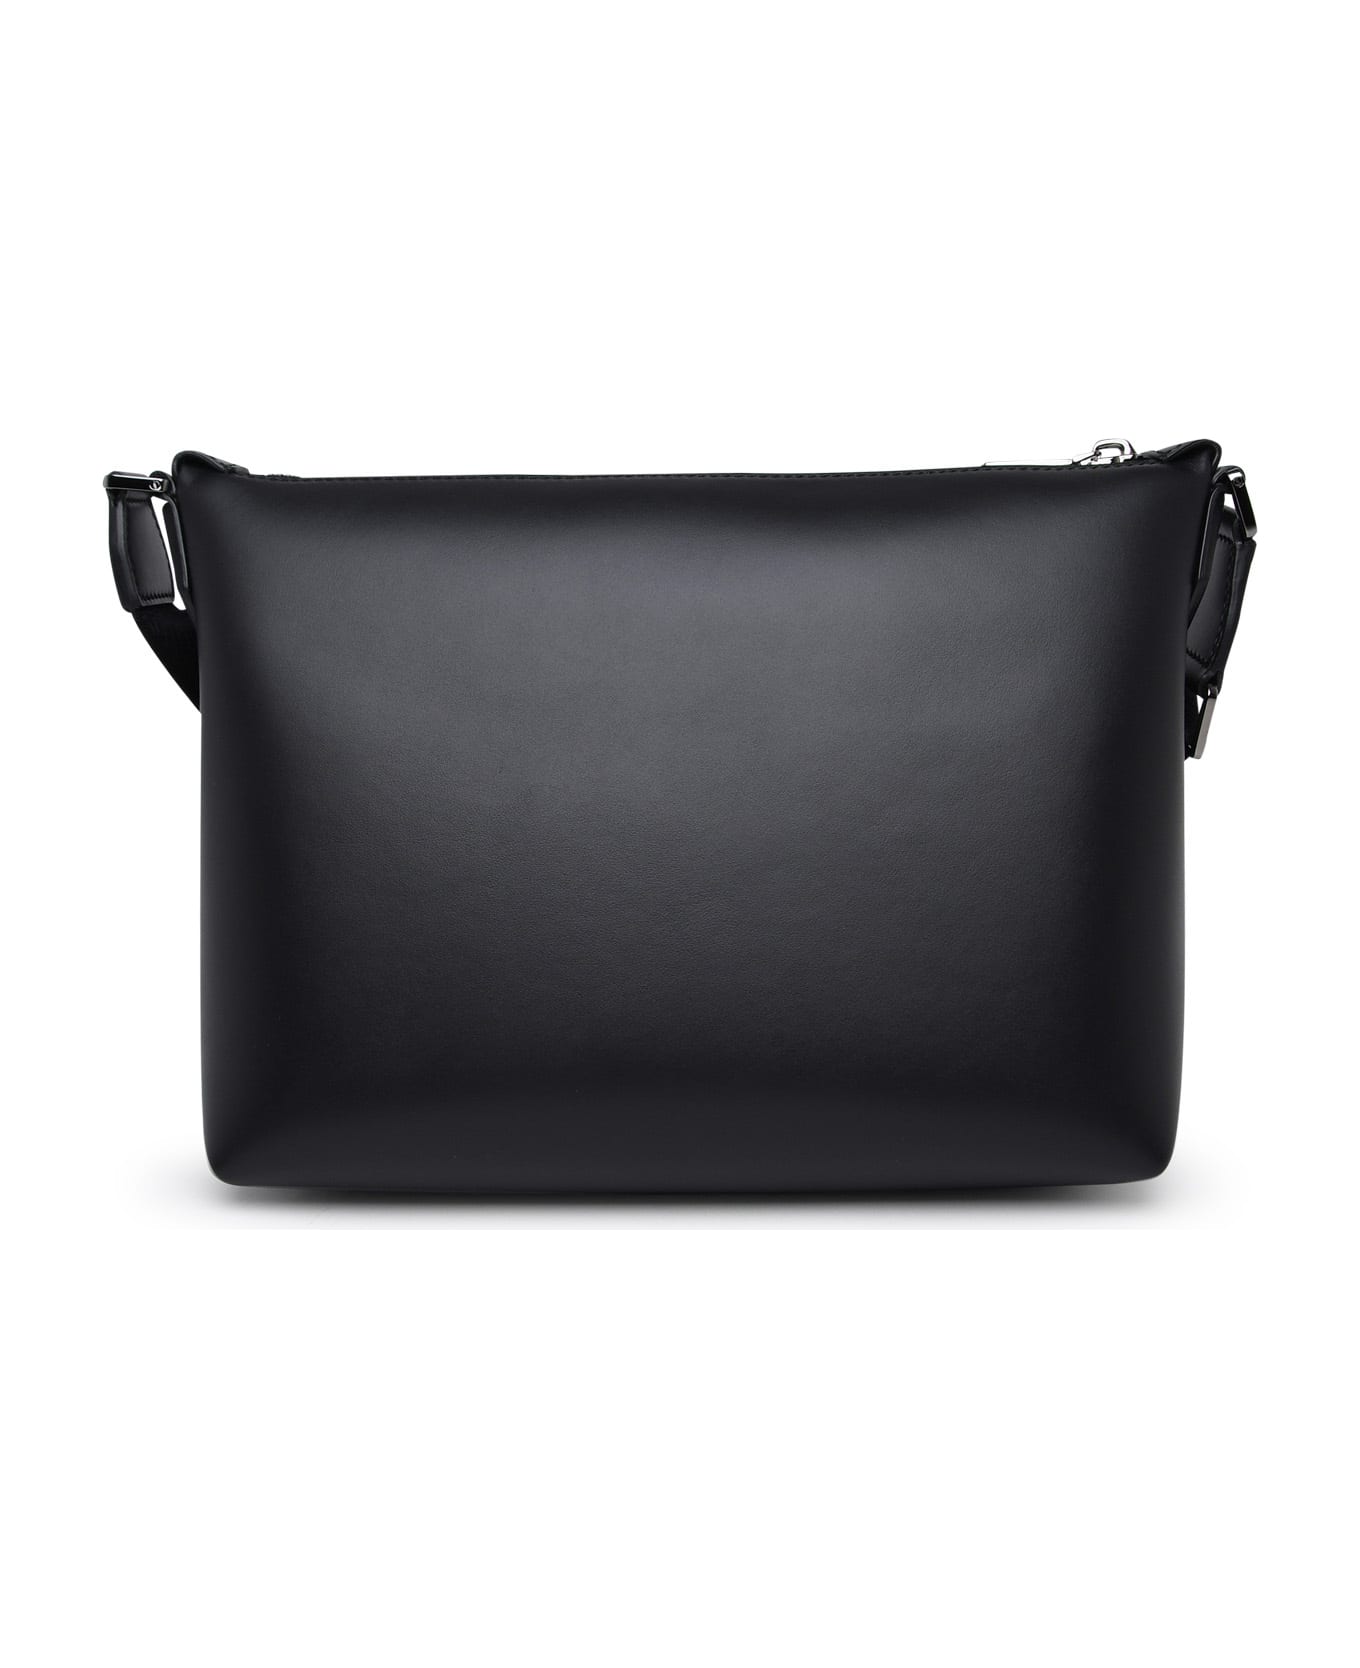 Dolce & Gabbana Black Leather Crossbody Bag - Black